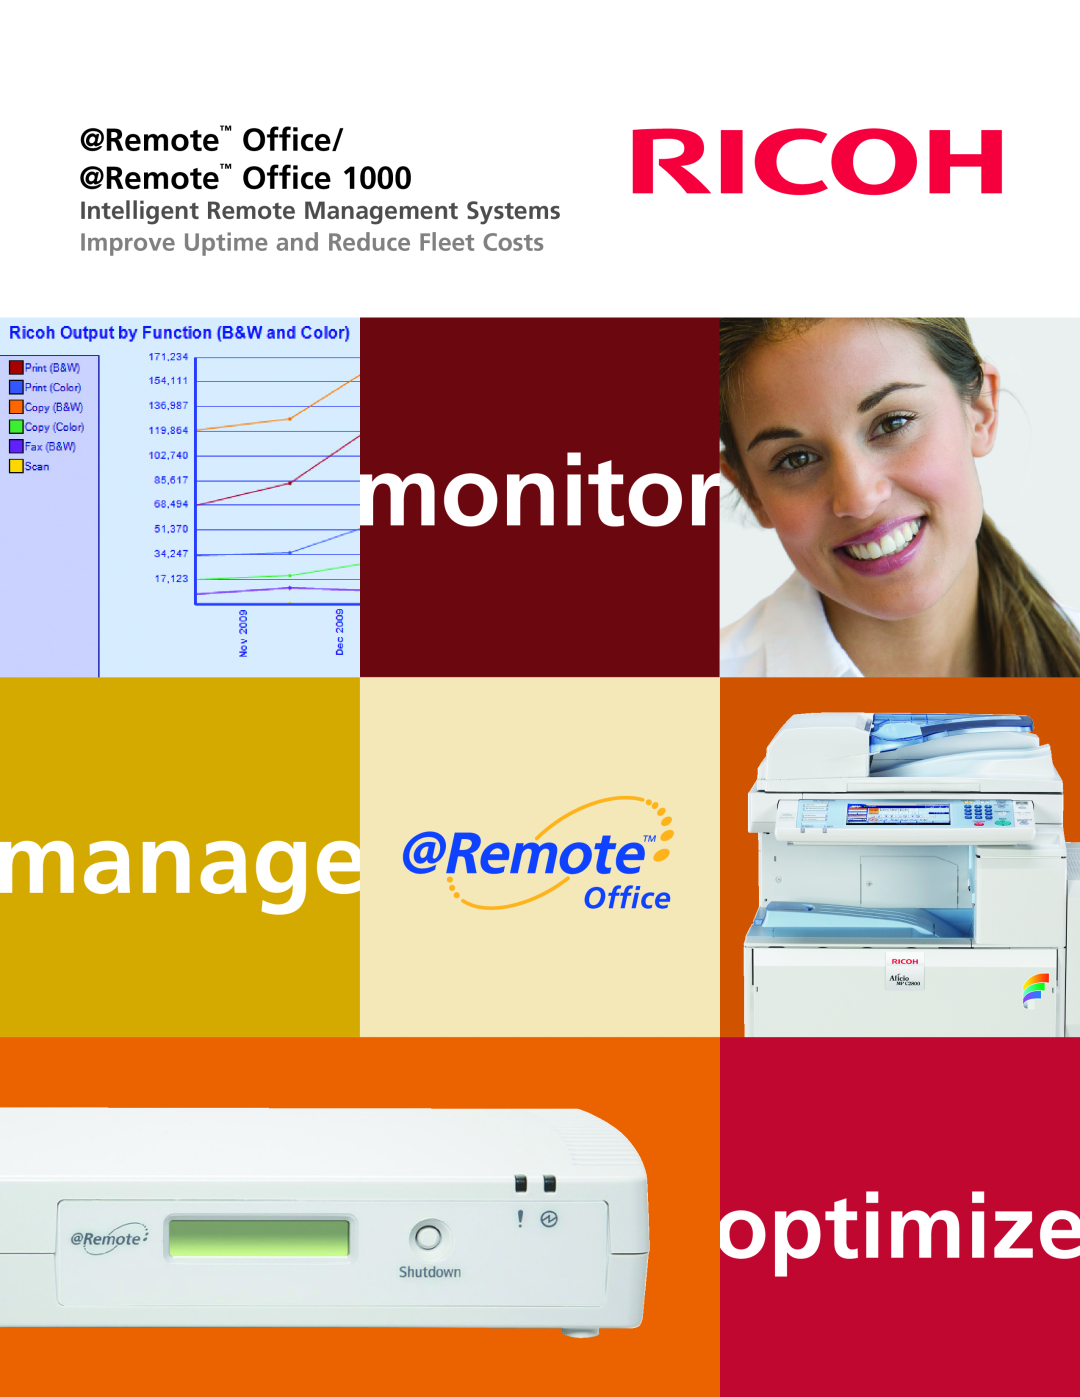 Ricoh 1000 manual monitor manage, optimize, @Remote Office @Remote Office, Intelligent Remote Management Systems 